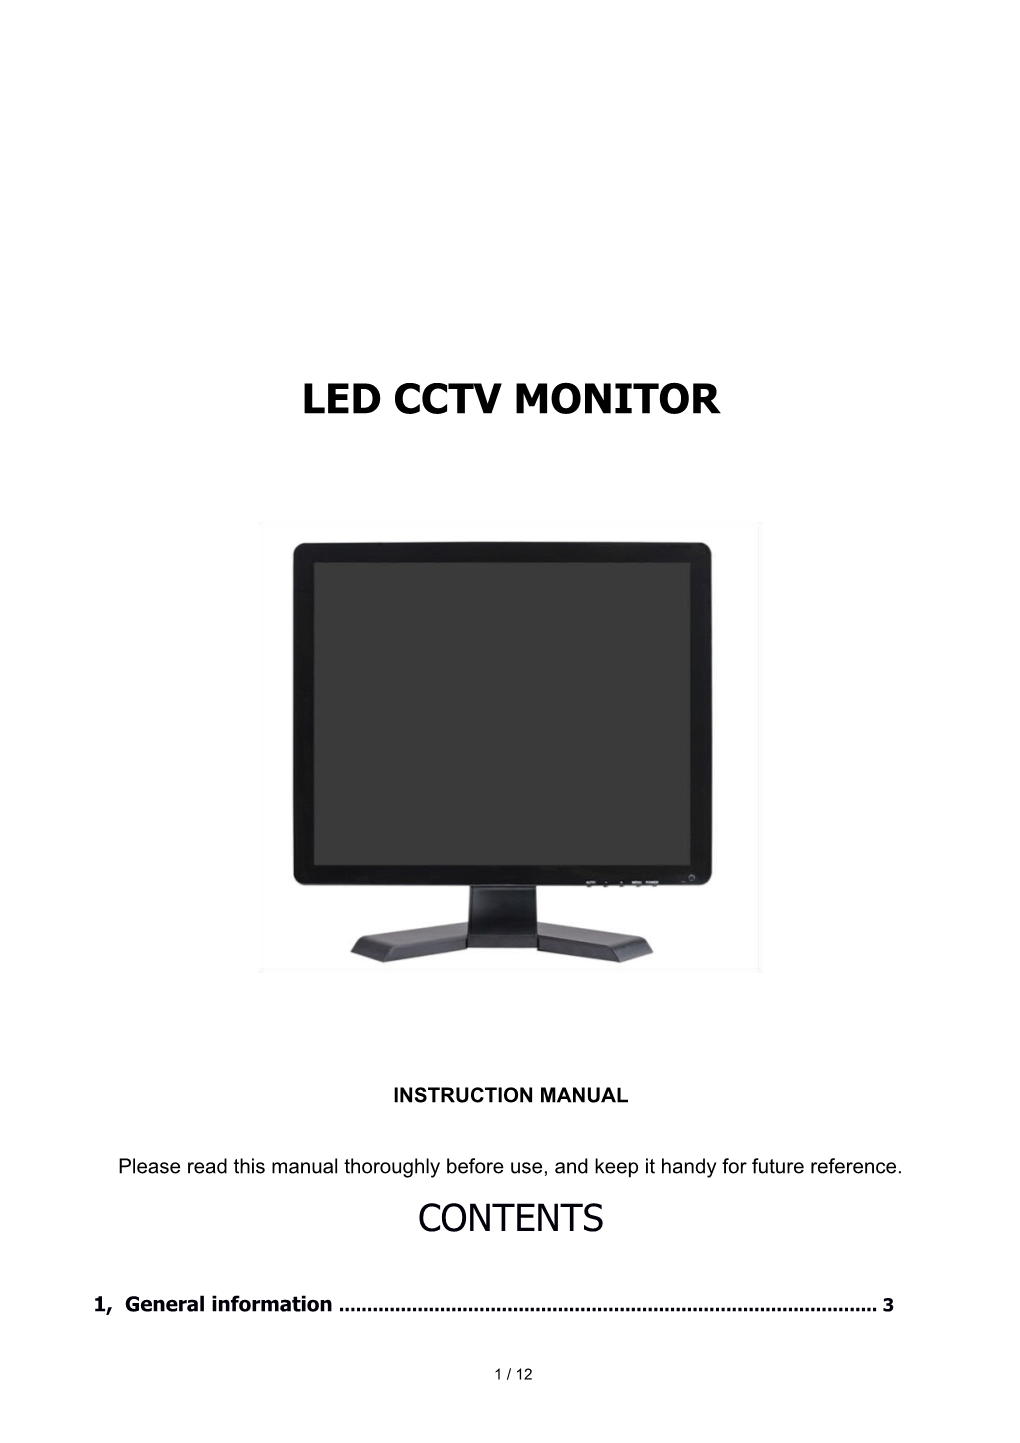 Led Cctv Monitor